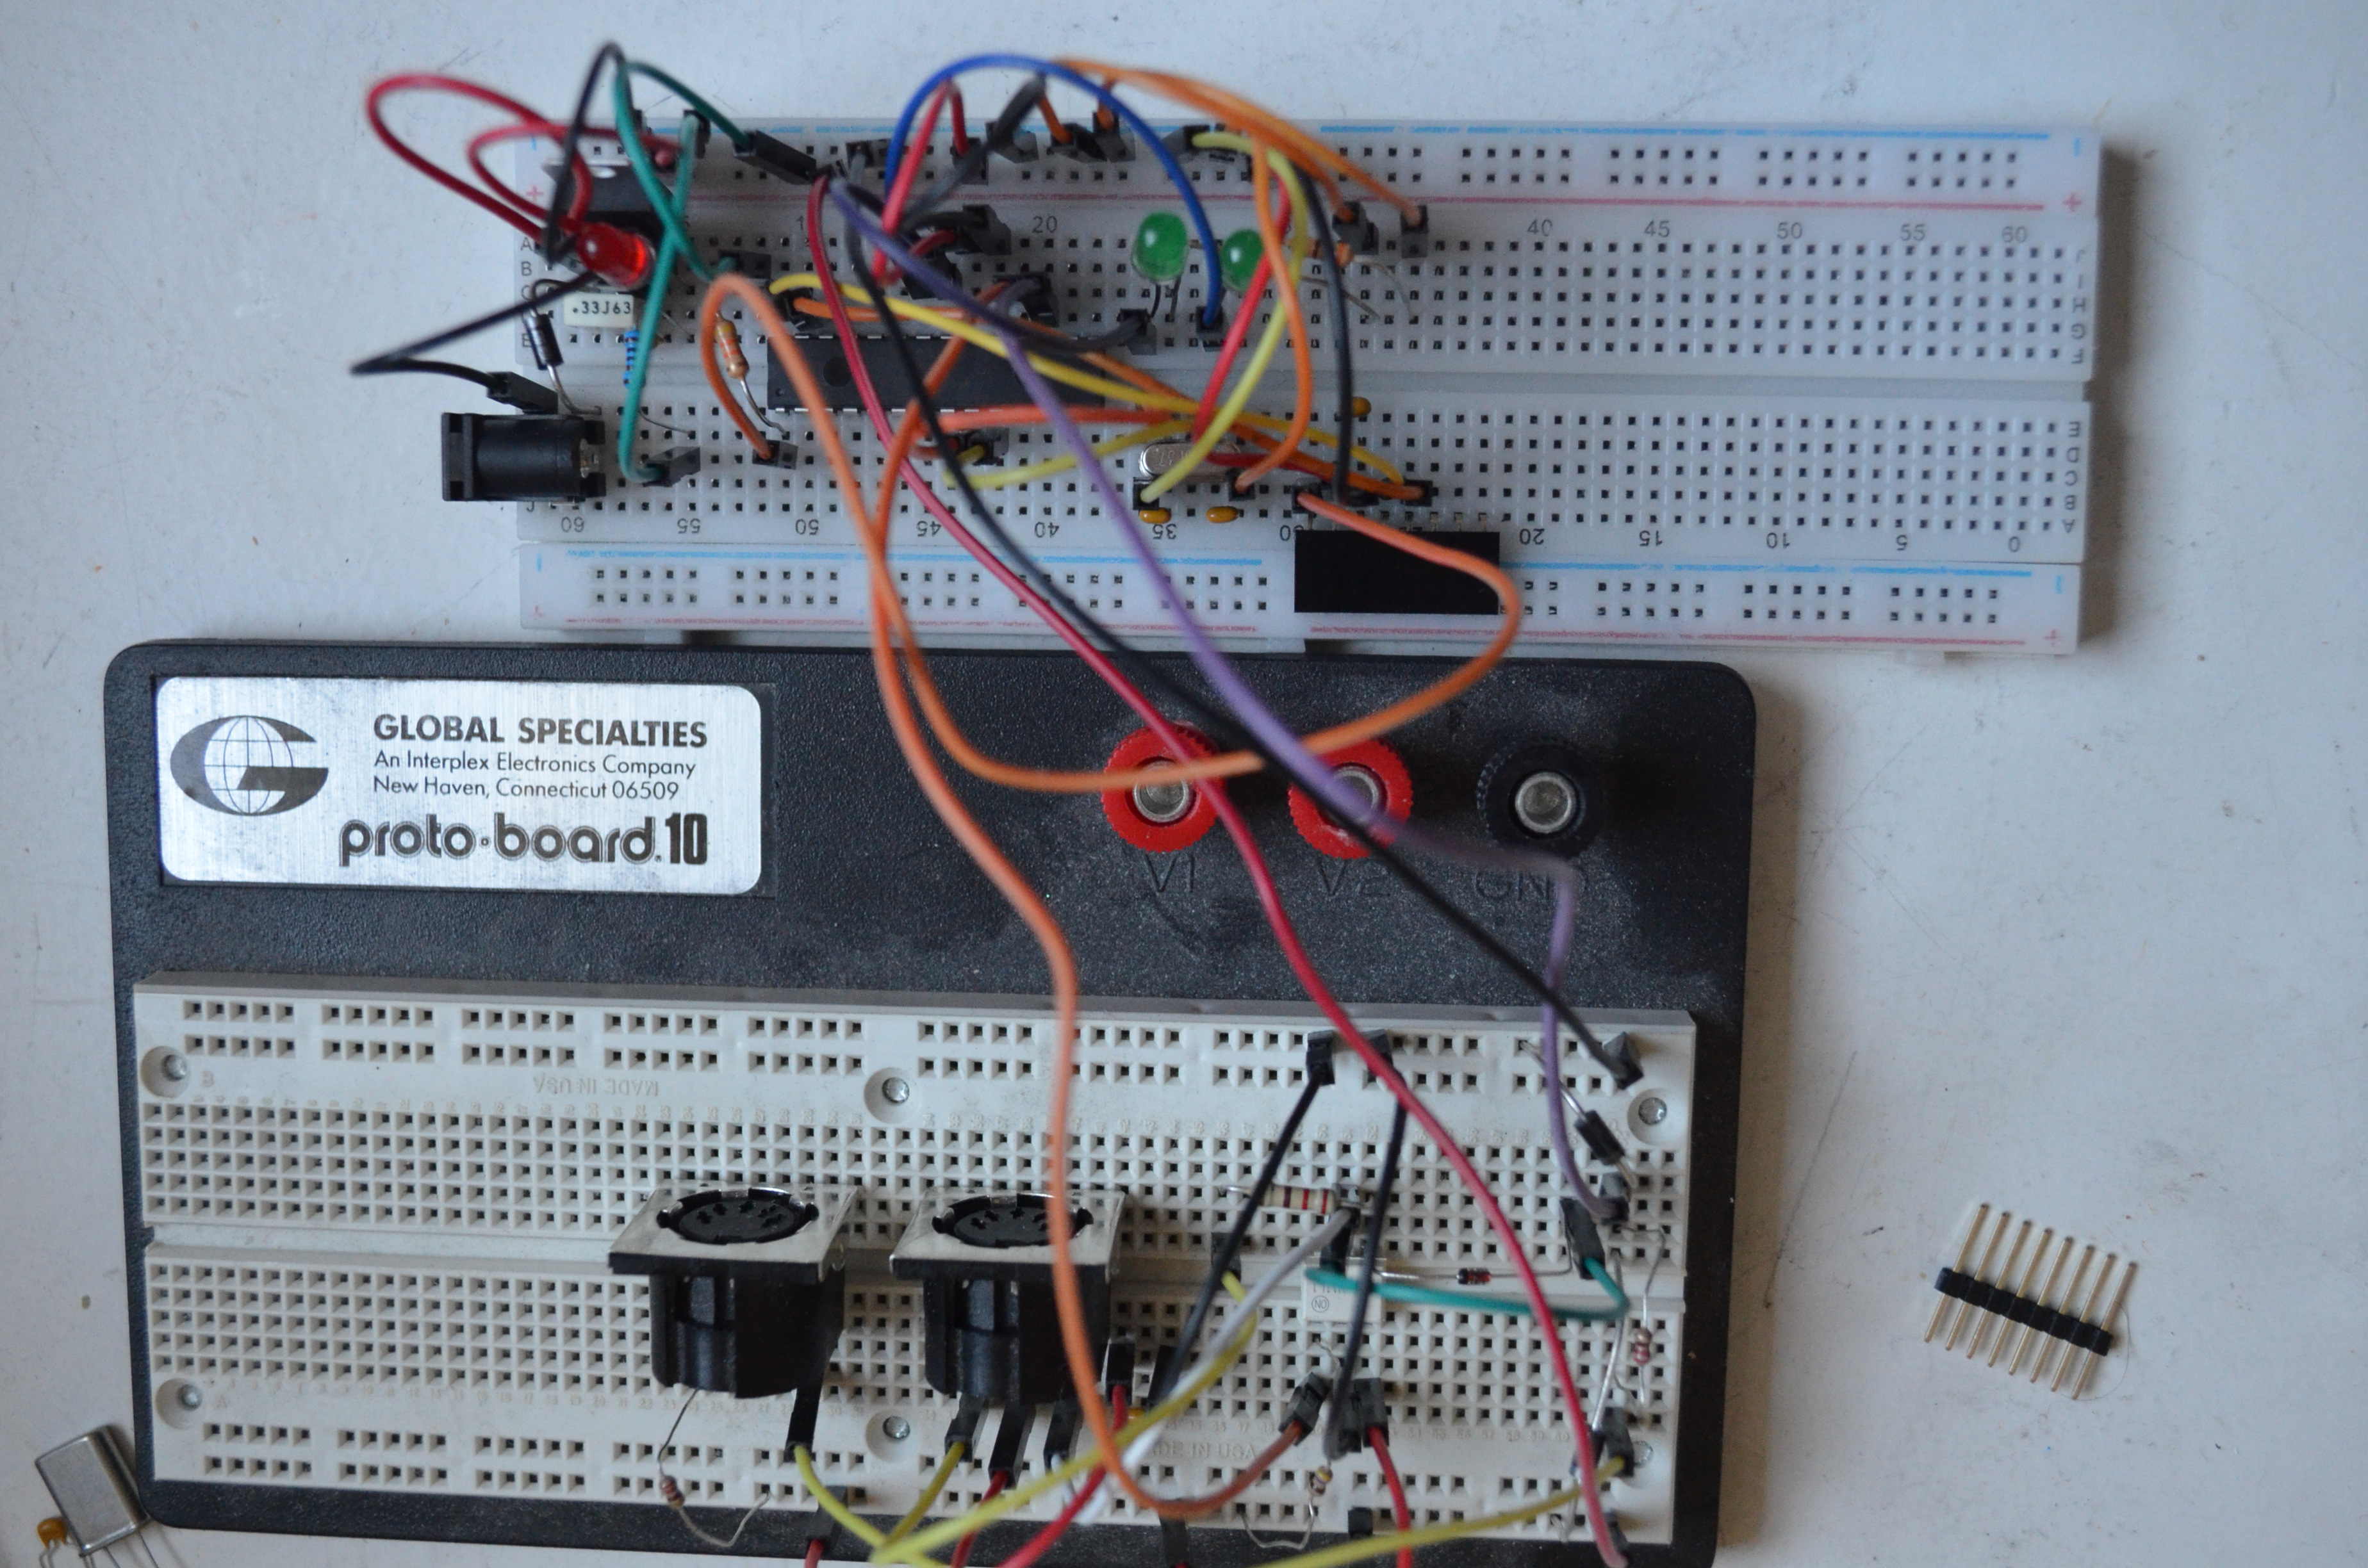 Breadboard-based prototype of PIC18-based MIDI processor